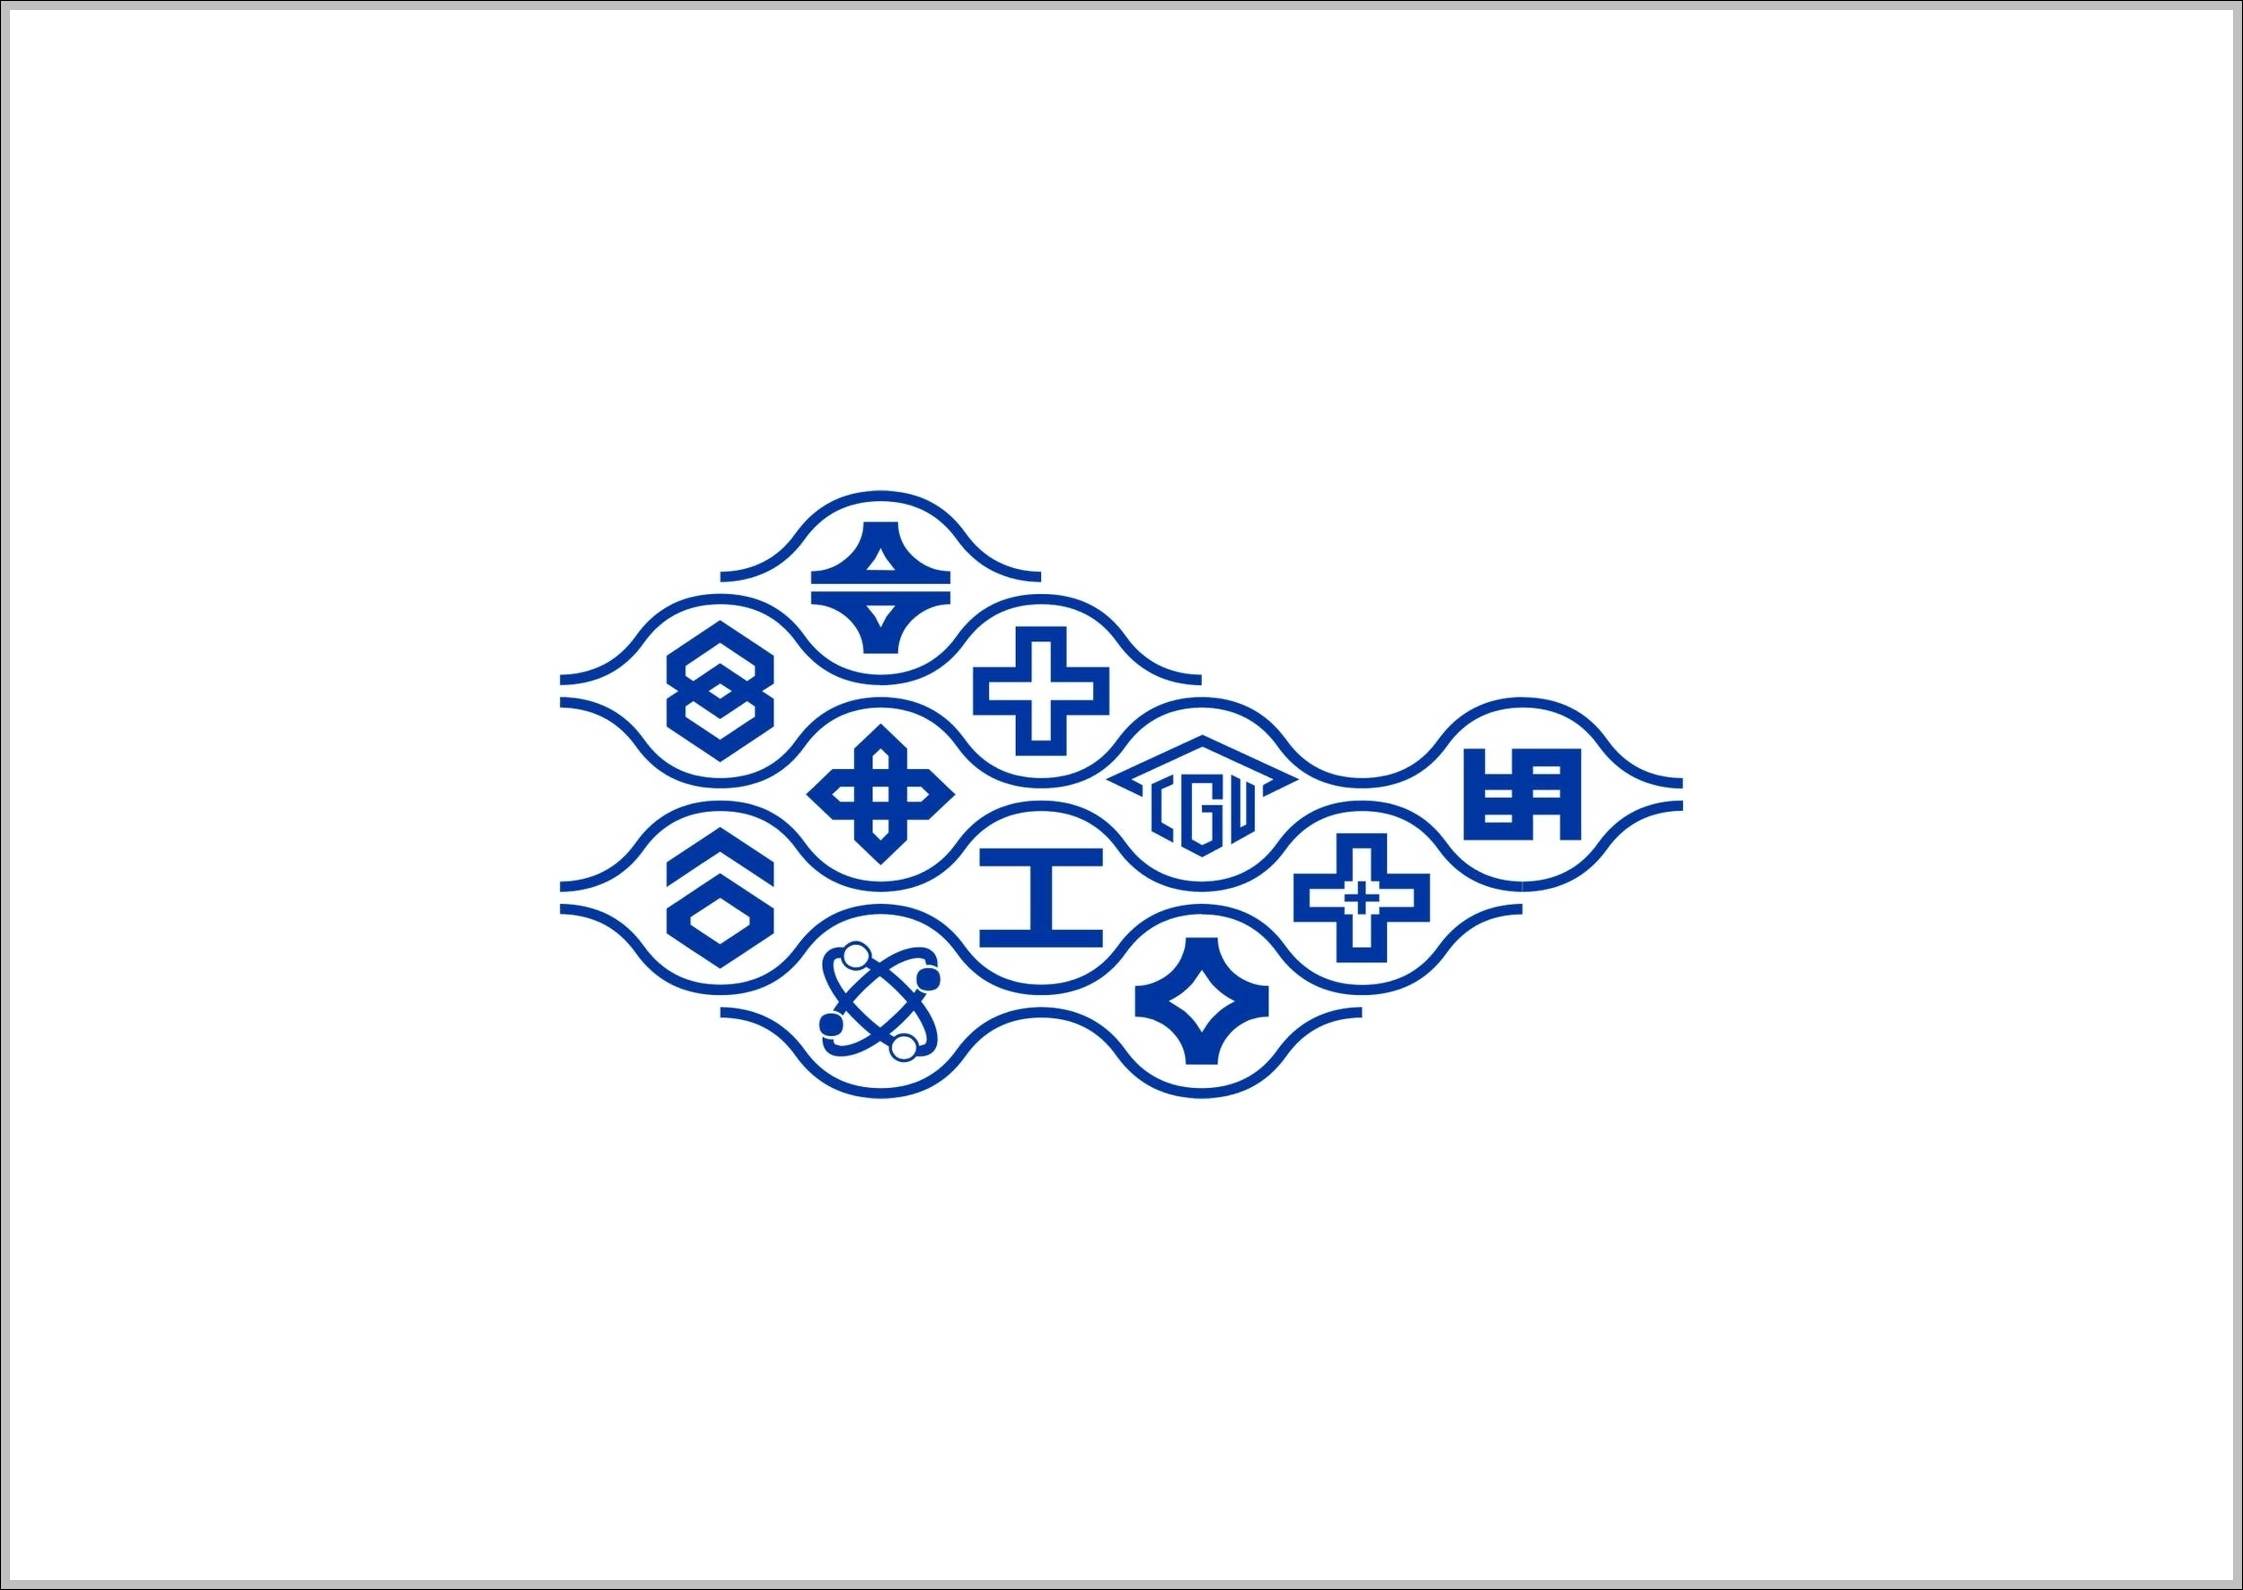 Formosa Plastic Group logo